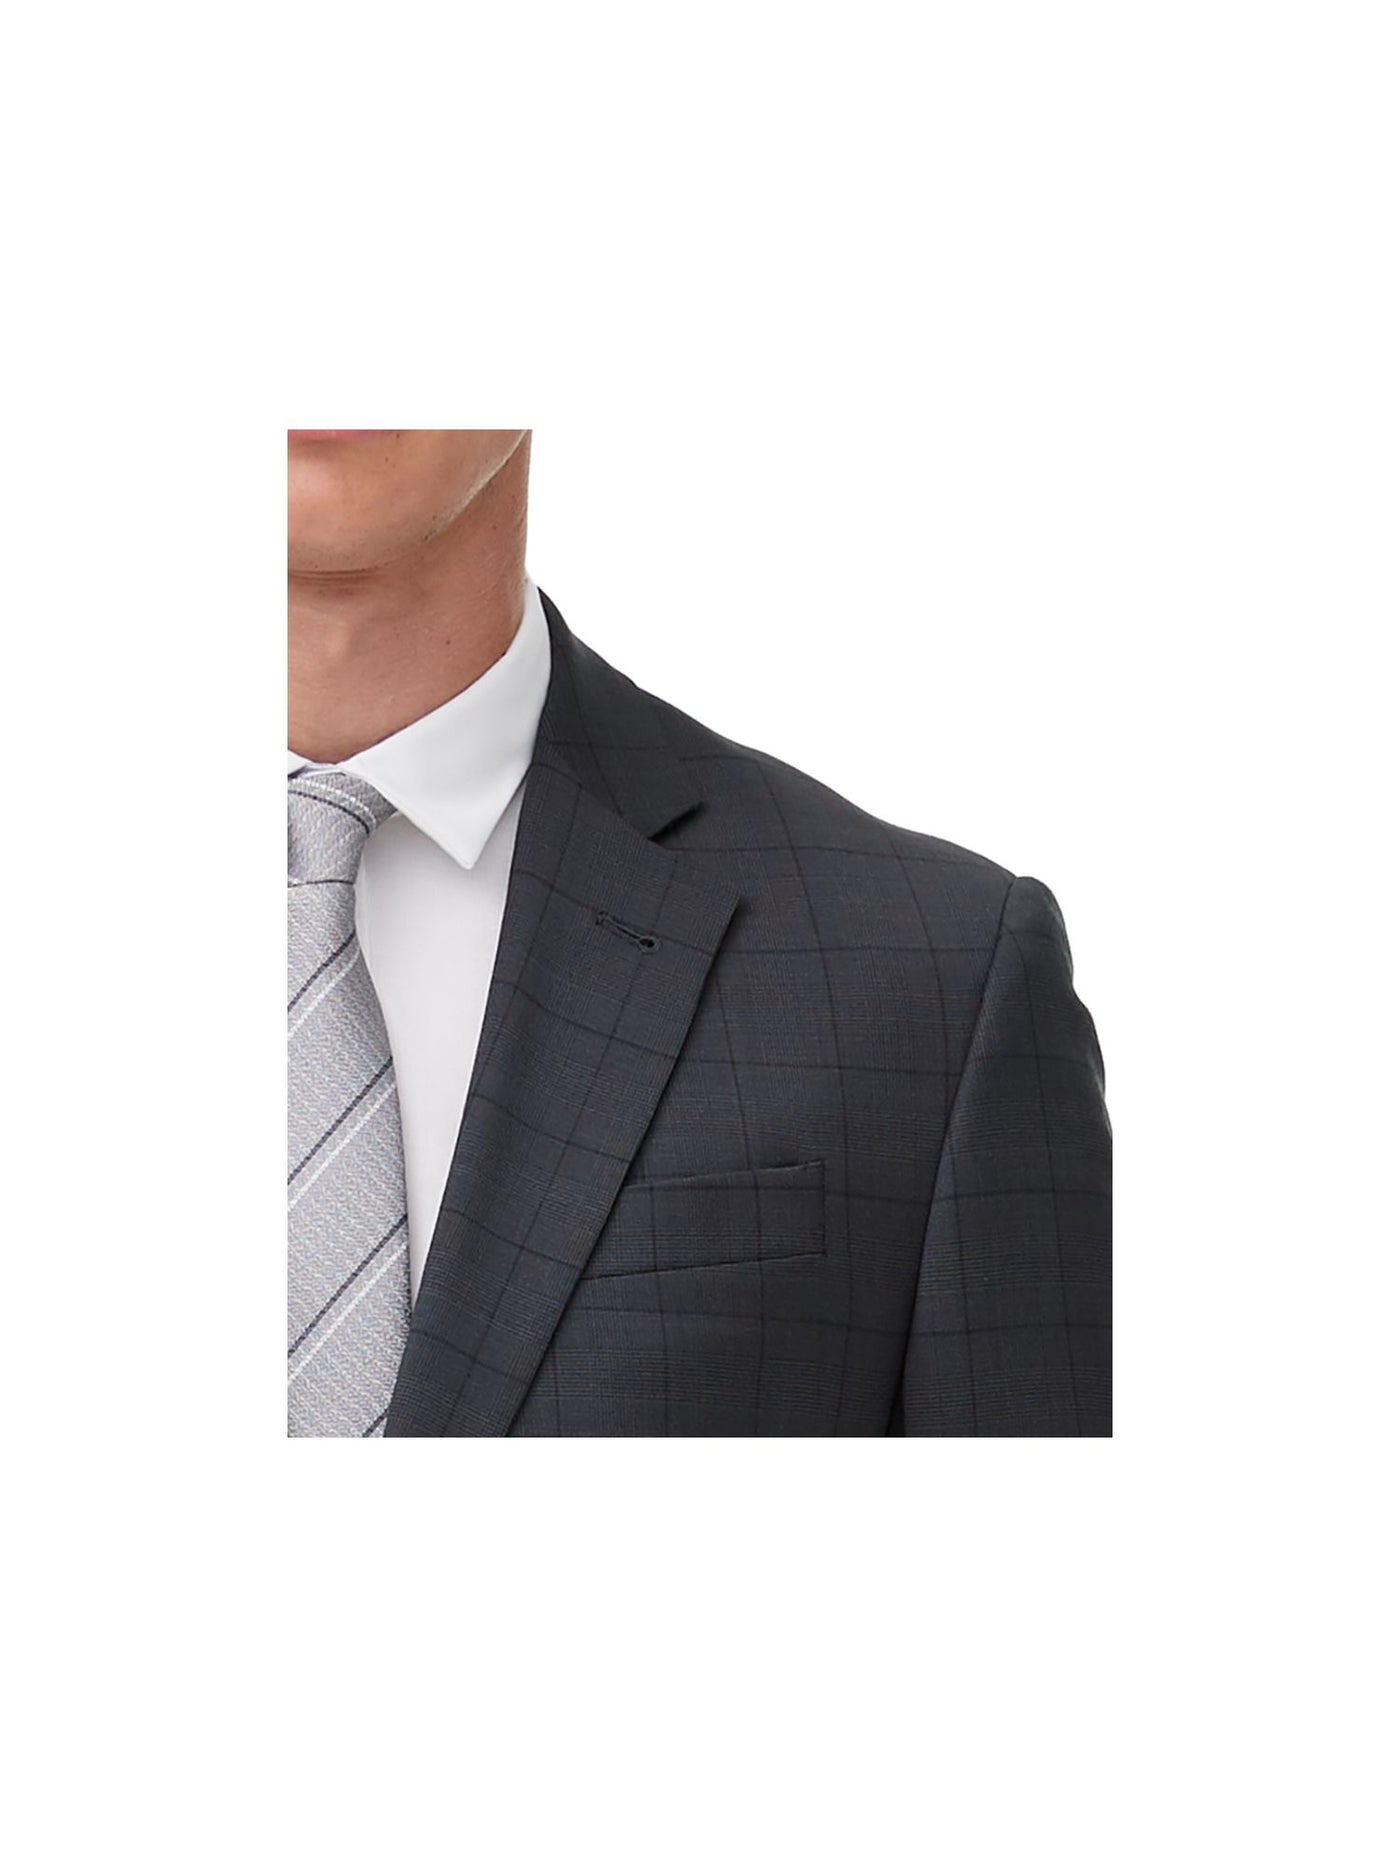 ARMANI EXCHANGE Mens Black Windowpane Plaid Suit Separate Blazer Jacket 44